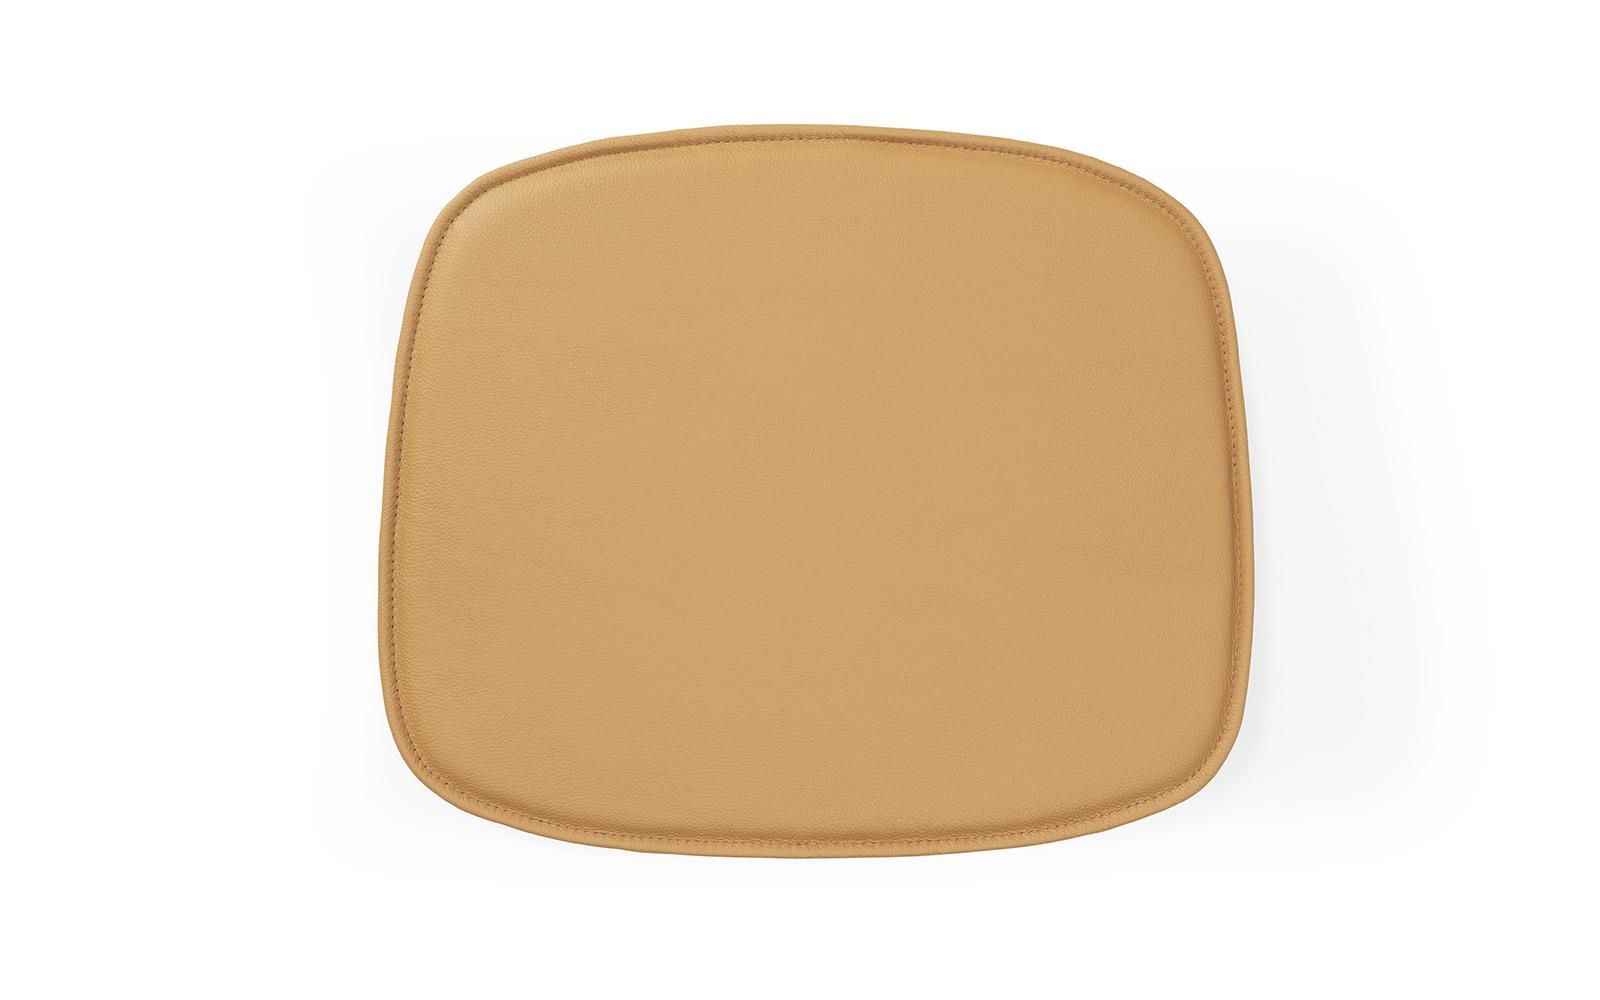 https://www.normann-copenhagen.com/-/media/Product-Pictures-Podio/Normann-Copenhagen/Form/Form-Seat-Cushion/Form-Seat-Cushion-Leather/602896/Form-Seat-Cushion-Ultra-Leather1.png